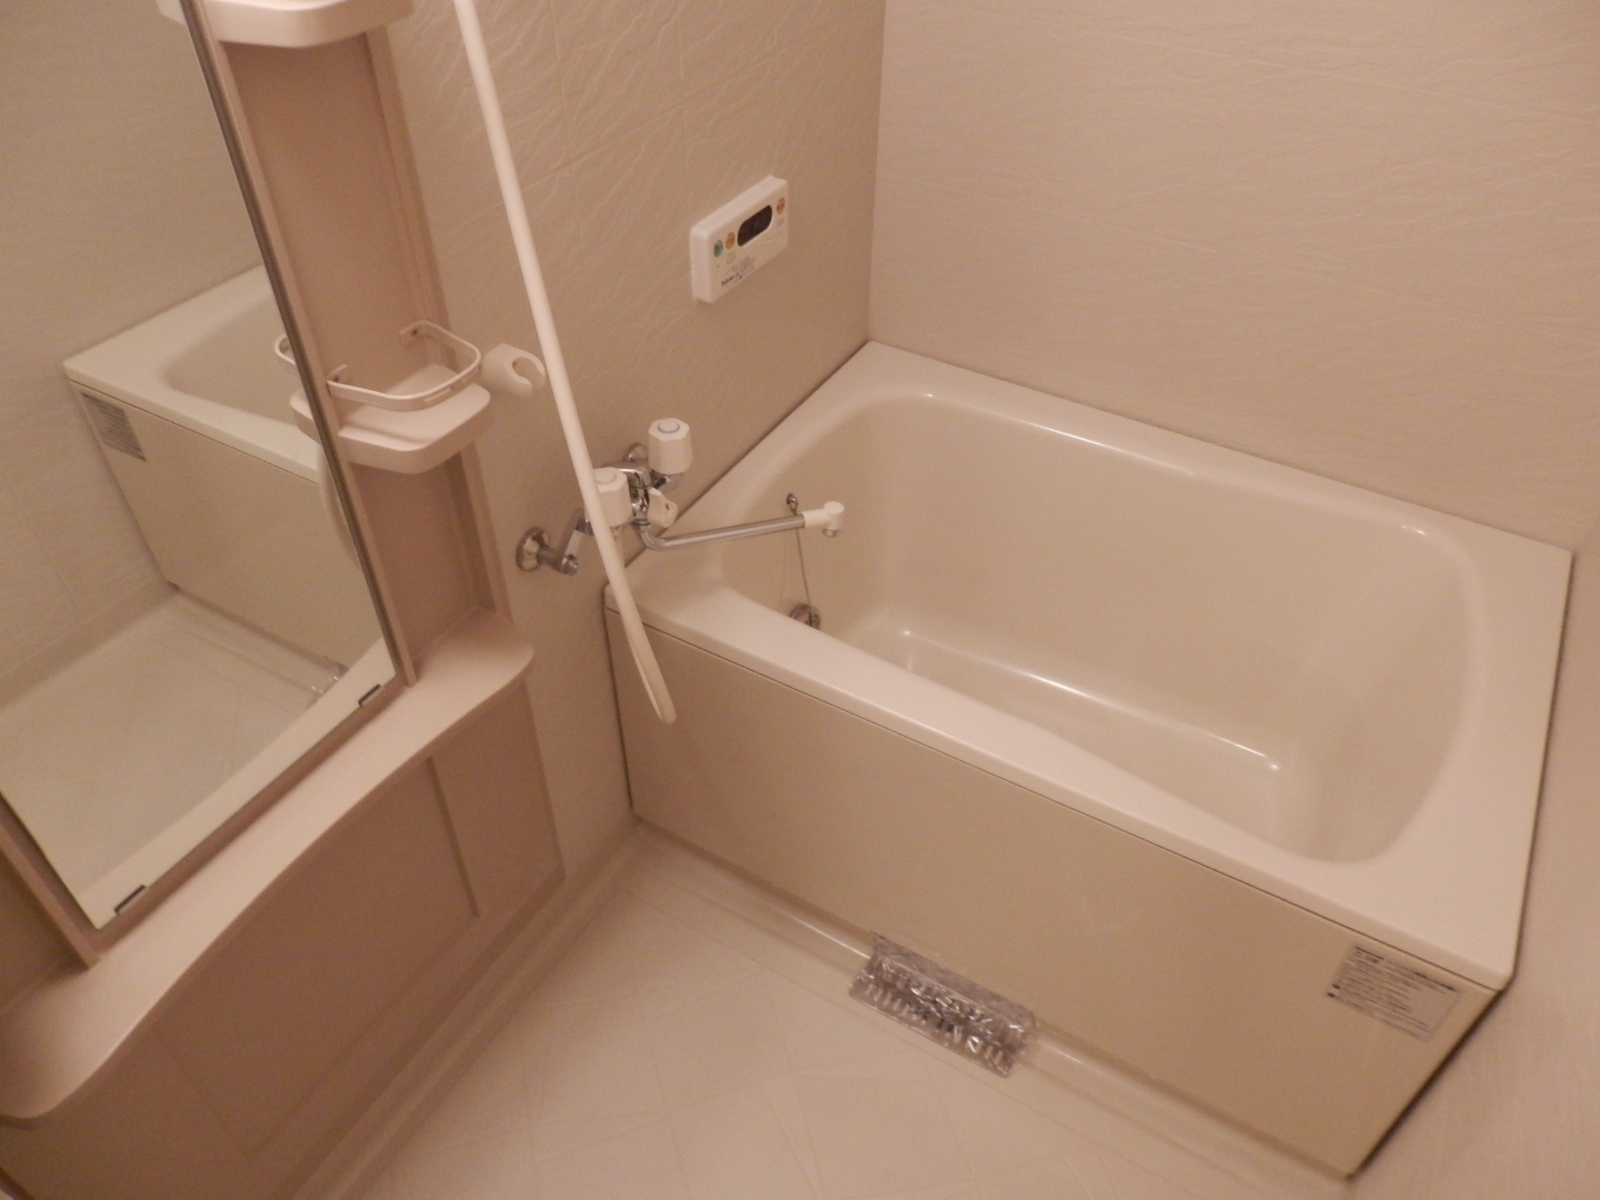 Bath. Bathroom ventilation dryer. It is reheating bathroom with function ☆